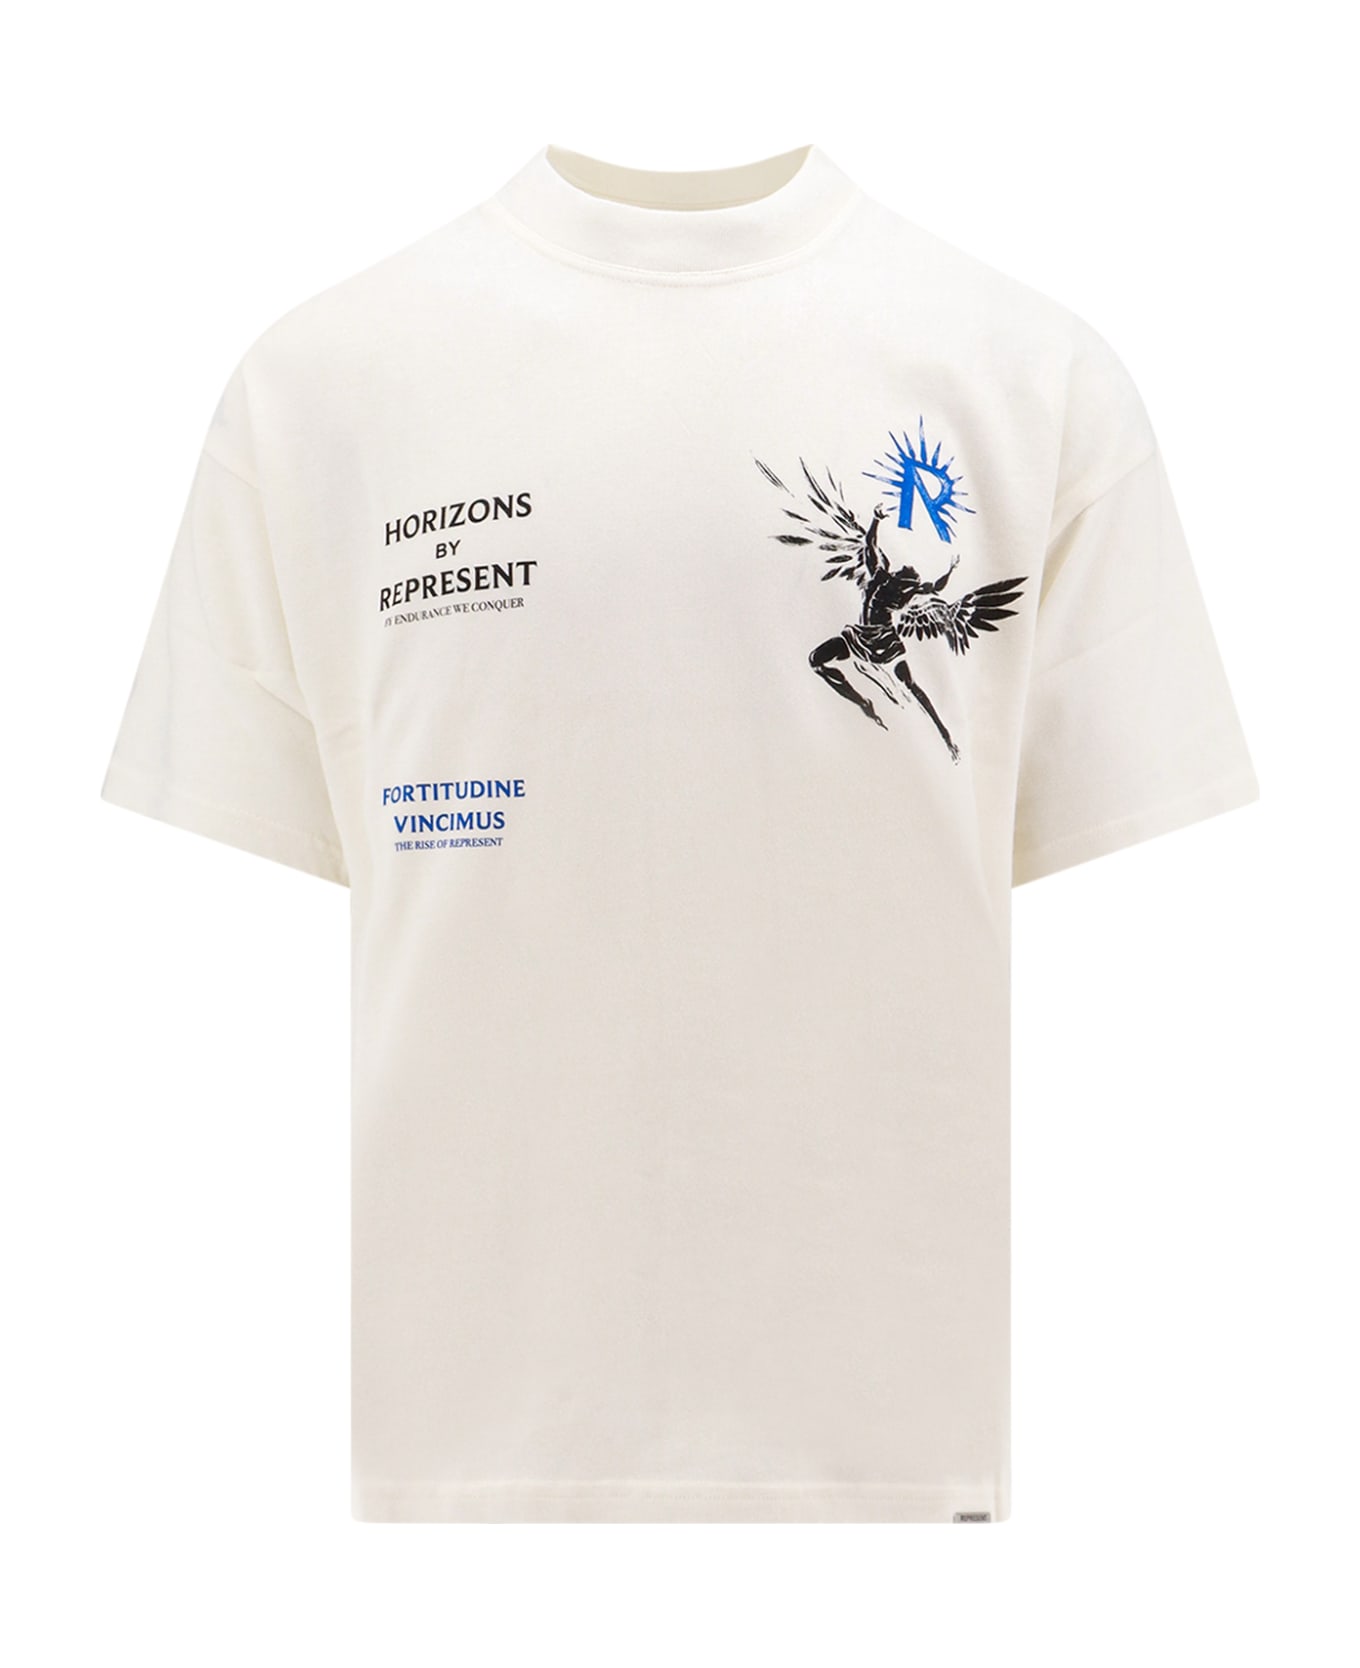 REPRESENT T-shirt T-Shirt - FLAT WHITE